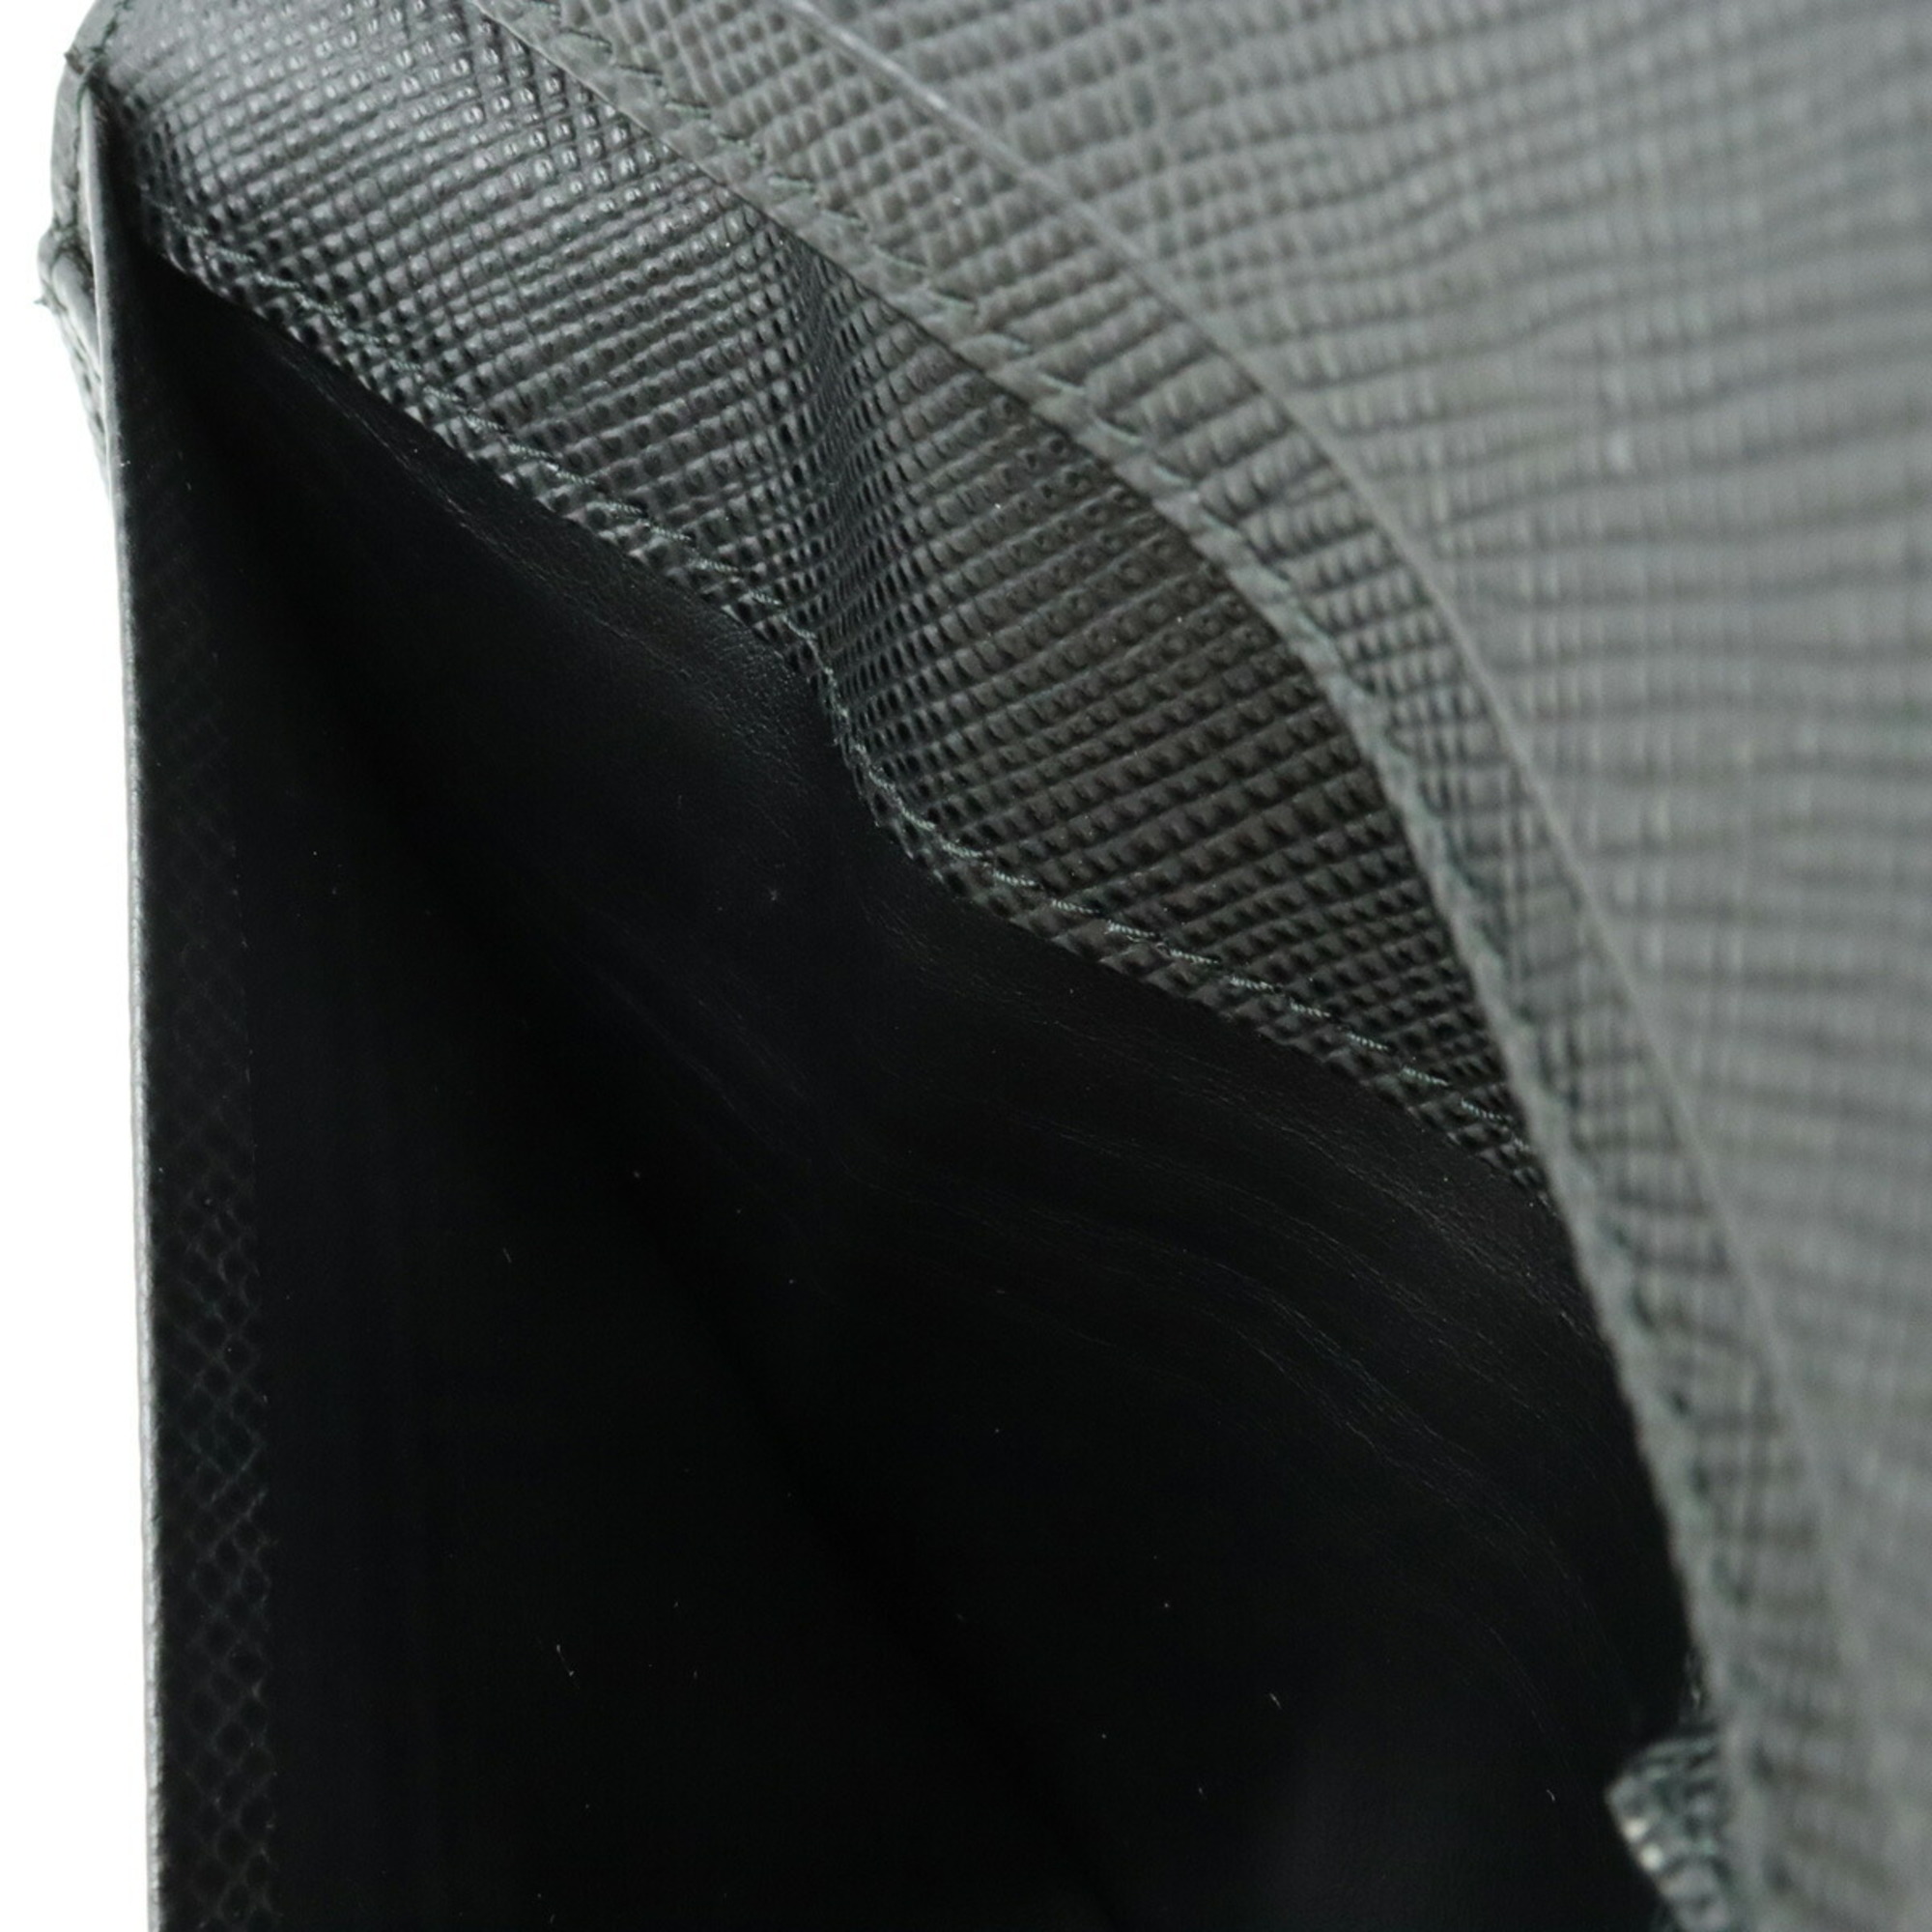 PRADA SAFFIANO CUIR C Bifold Long Wallet Saffiano Leather NERO Black Boutique Purchased Item 2MV836